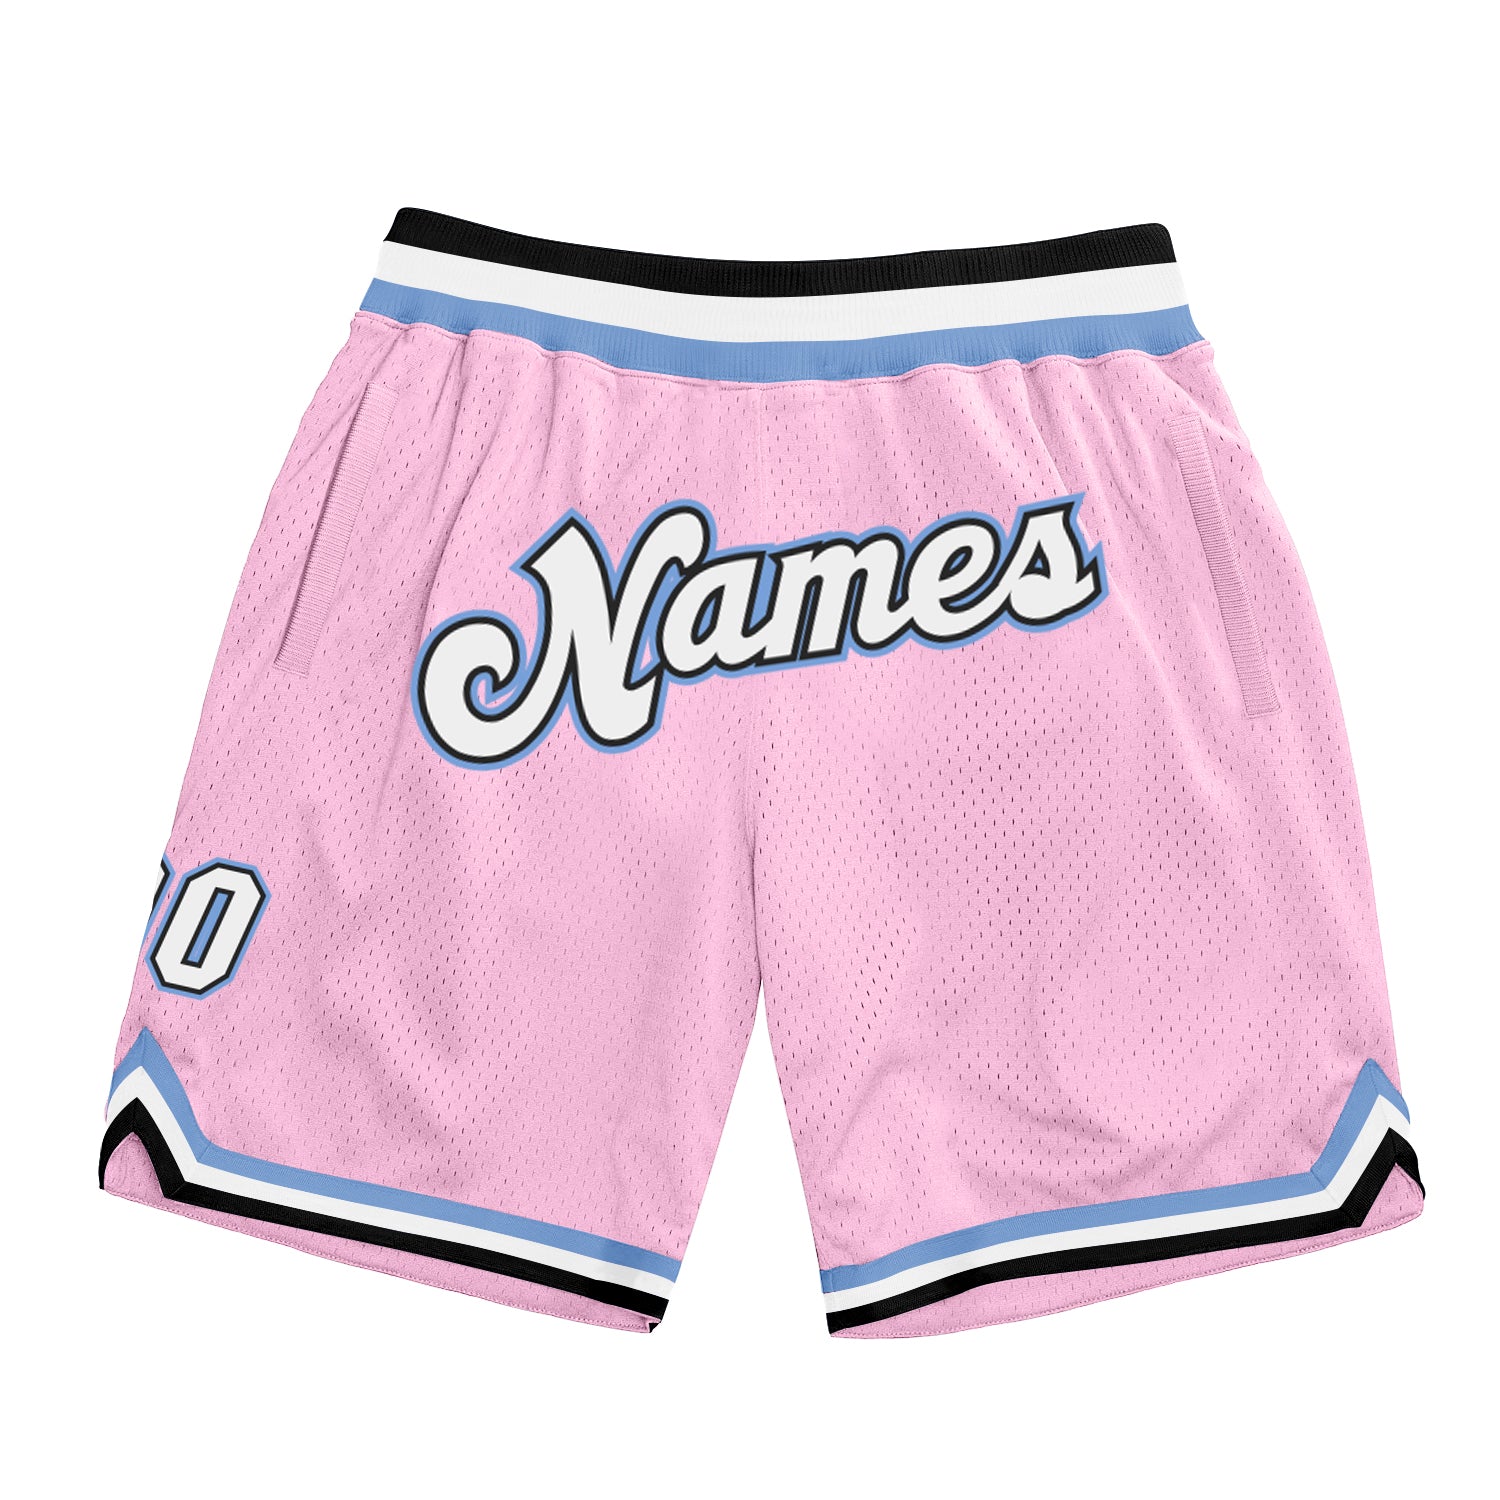 FANSIDEA Custom Pink White Pinstripe White-Light Blue Authentic Basketball Shorts Men's Size:S